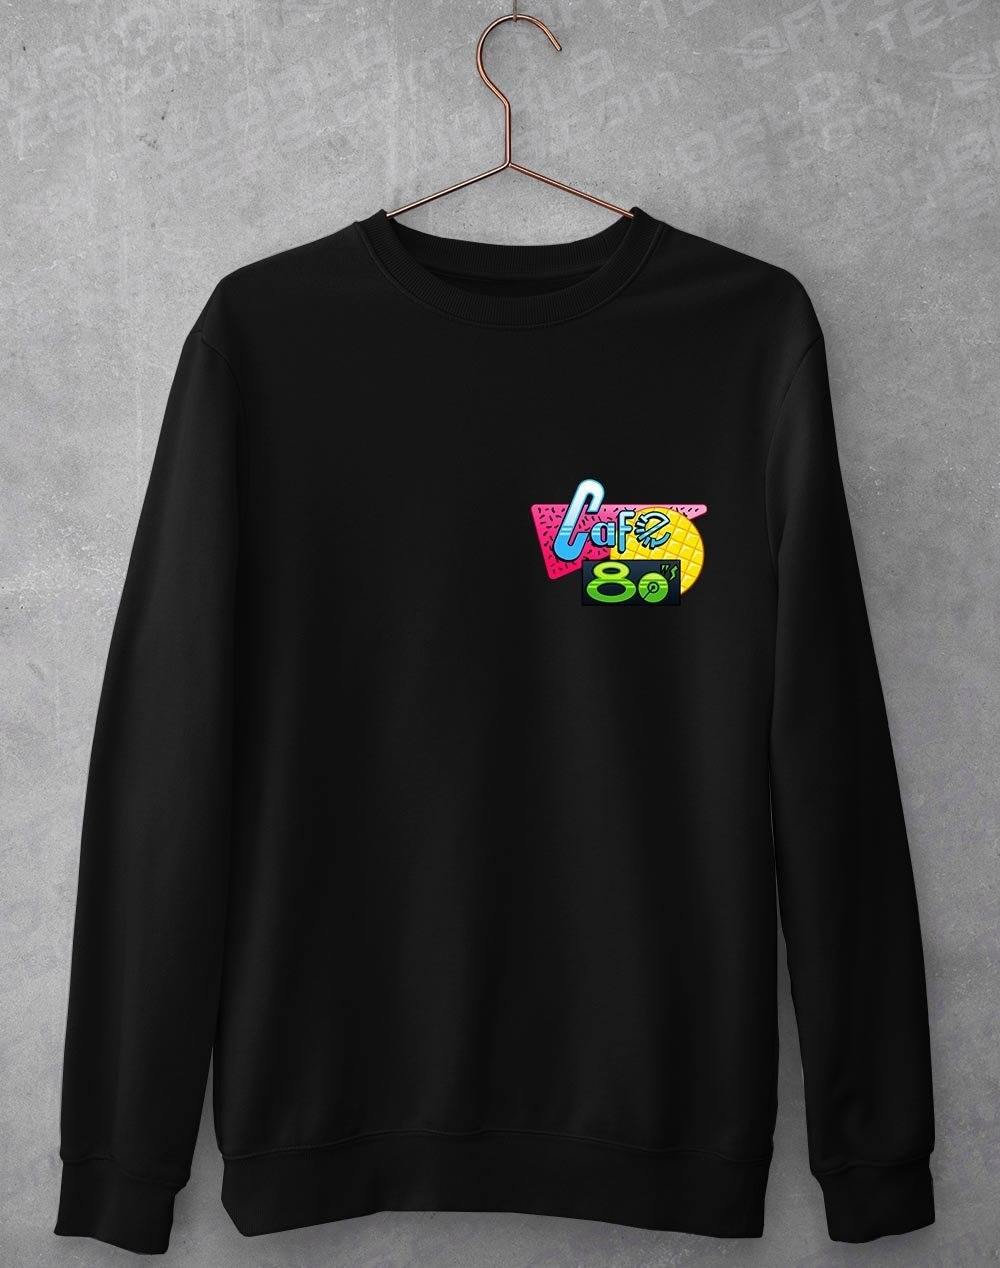 Cafe 80s Pocket Print Sweatshirt S / Black  - Off World Tees